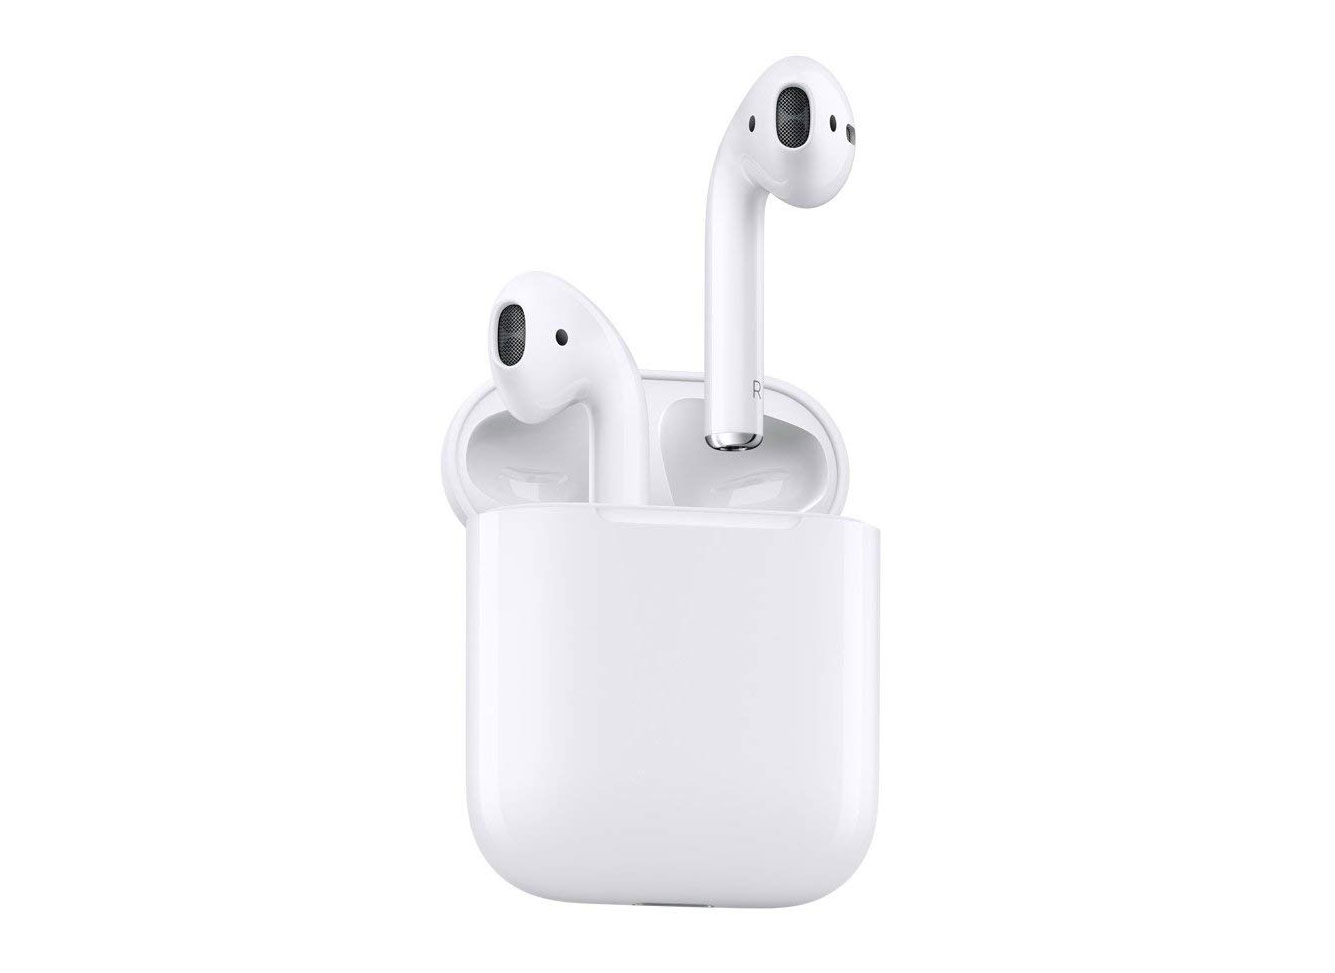 Apple AirPods wireless headphones